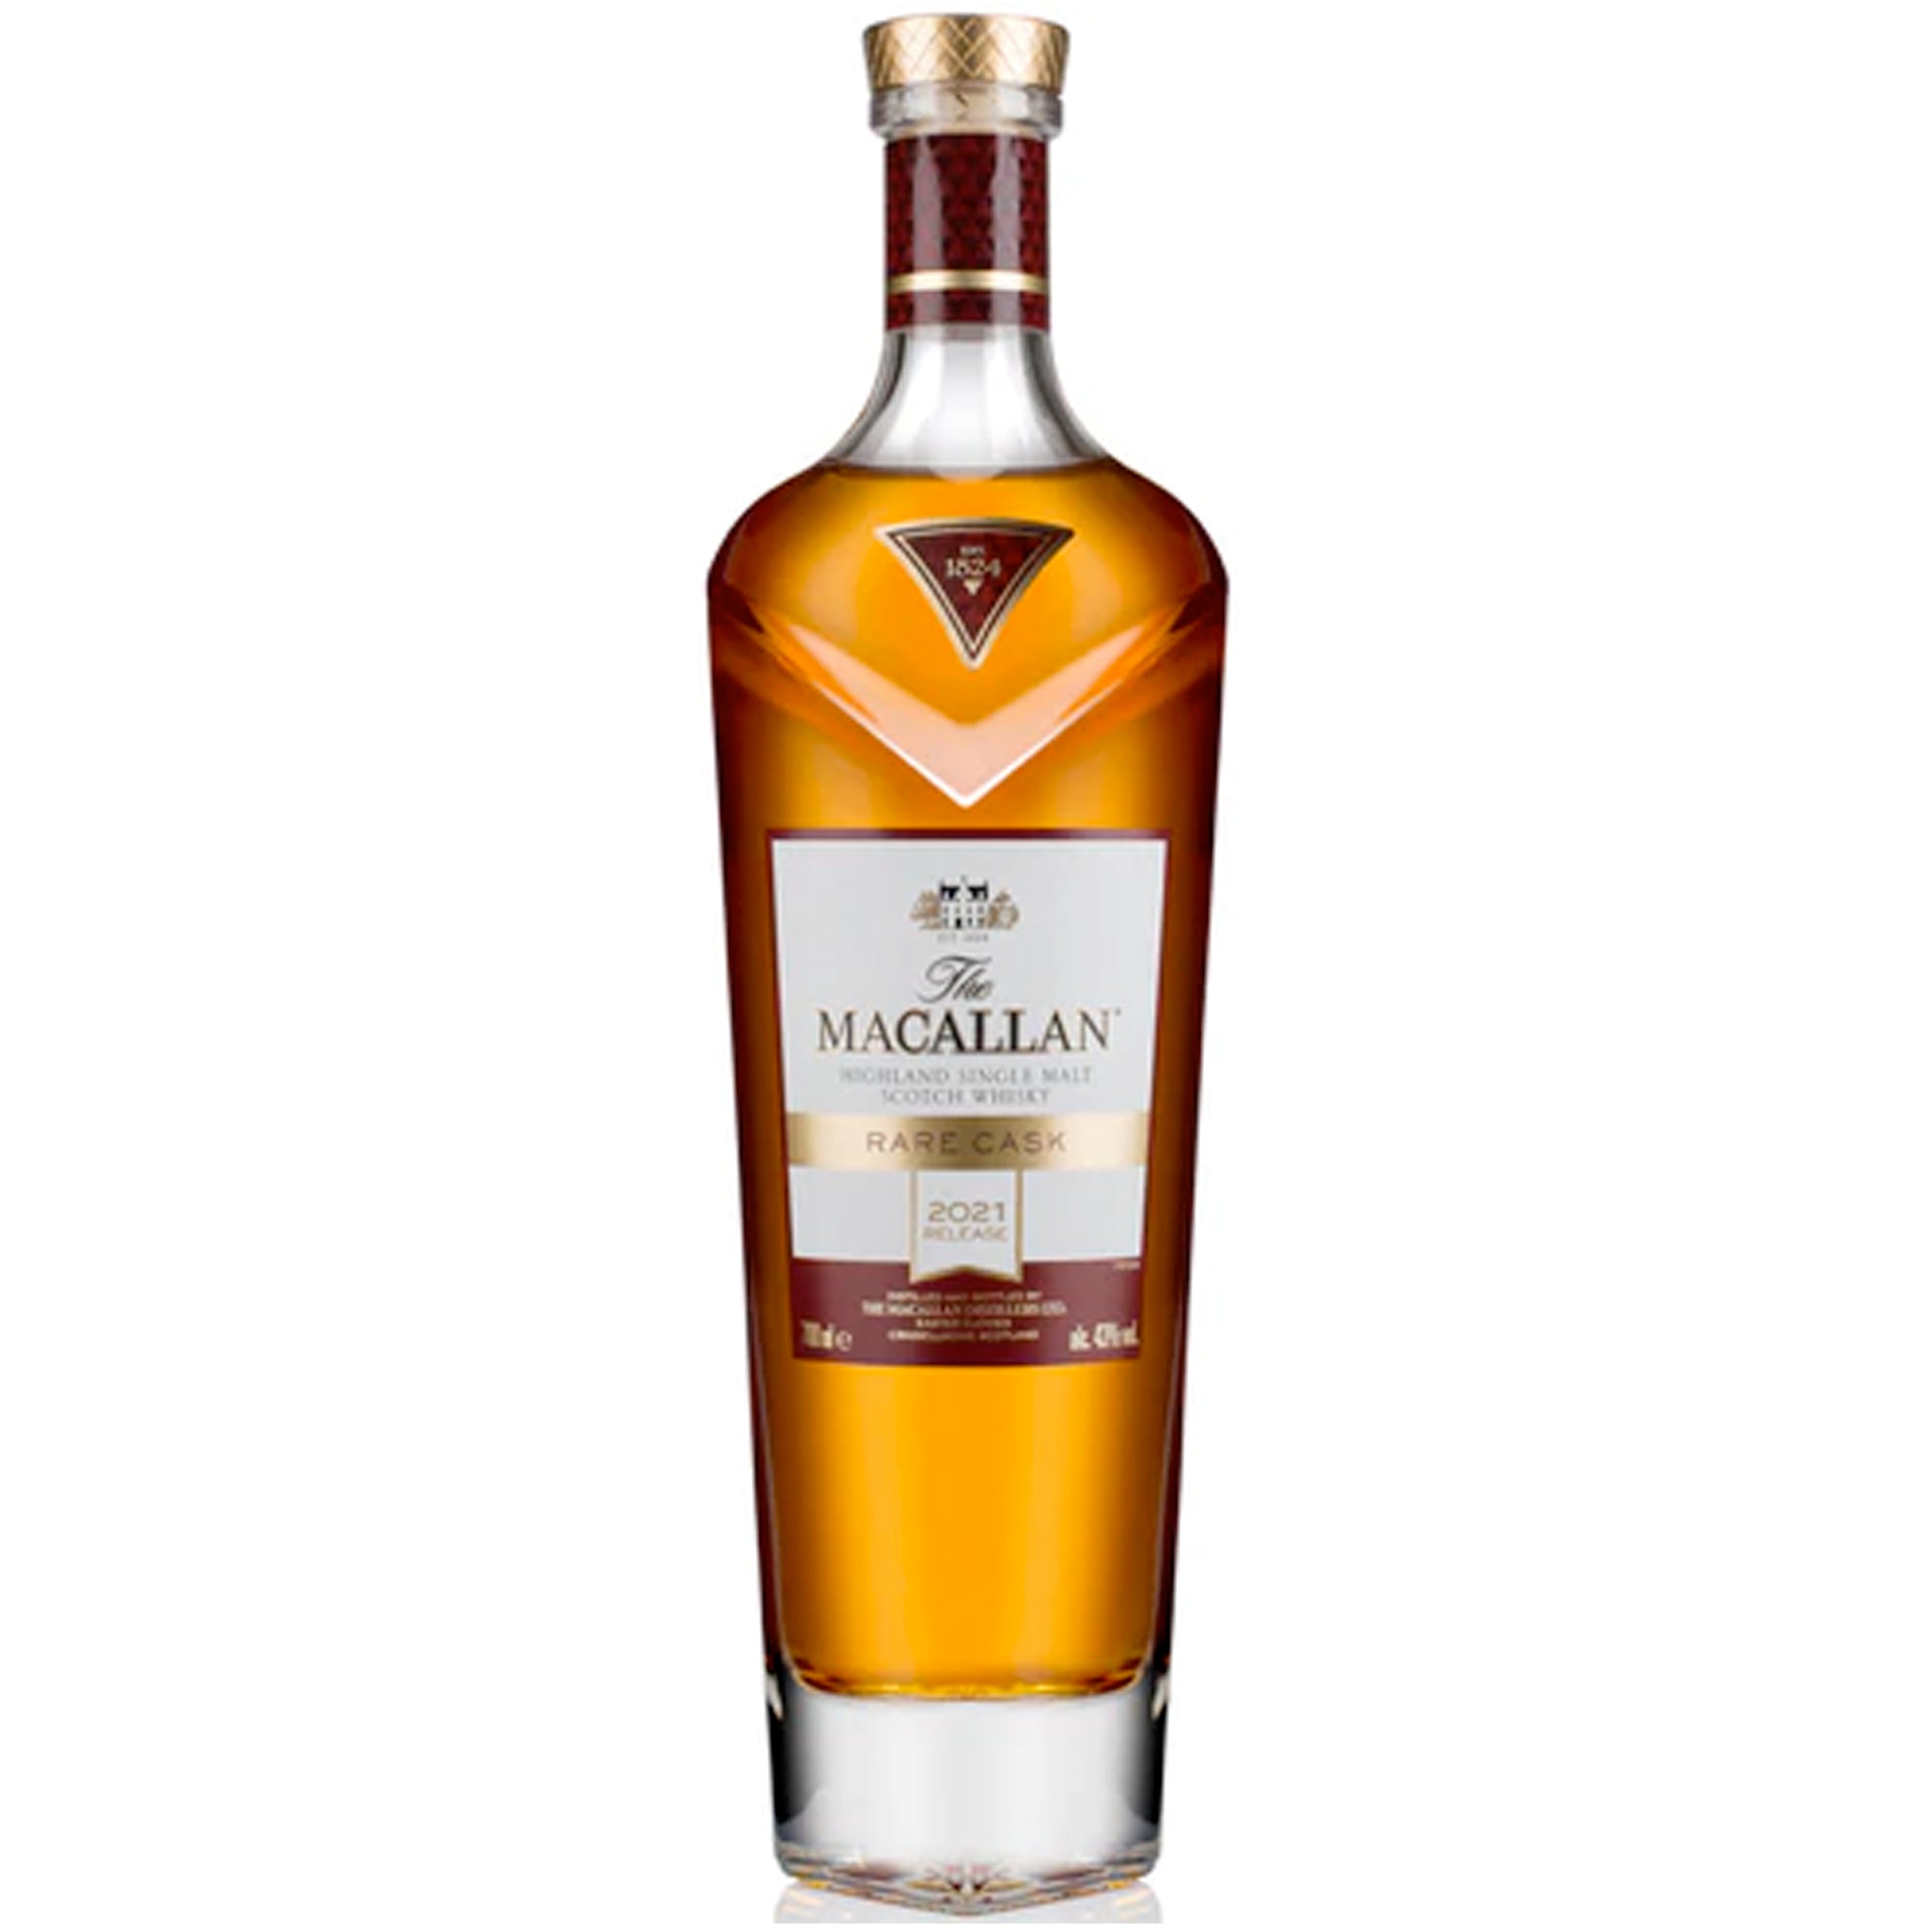 The Macallan Rare Cask Scotch Whisky 2021 Release